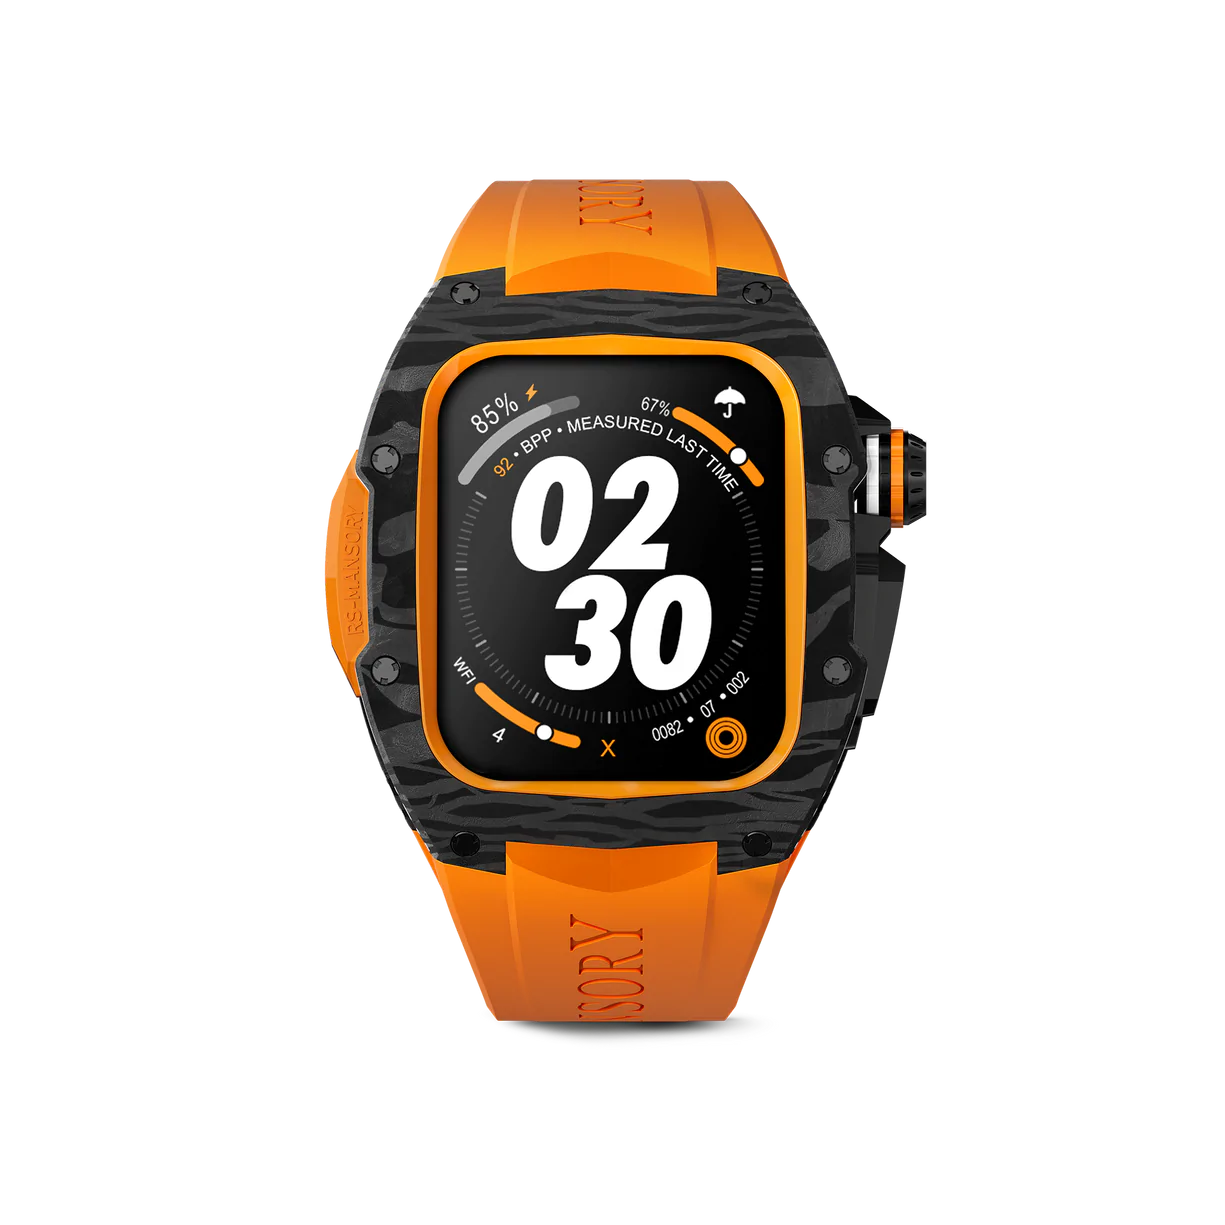 Golden Concept x MANSORY Apple Watch Case - RSM - SUNSET ORANGE Limited Edition